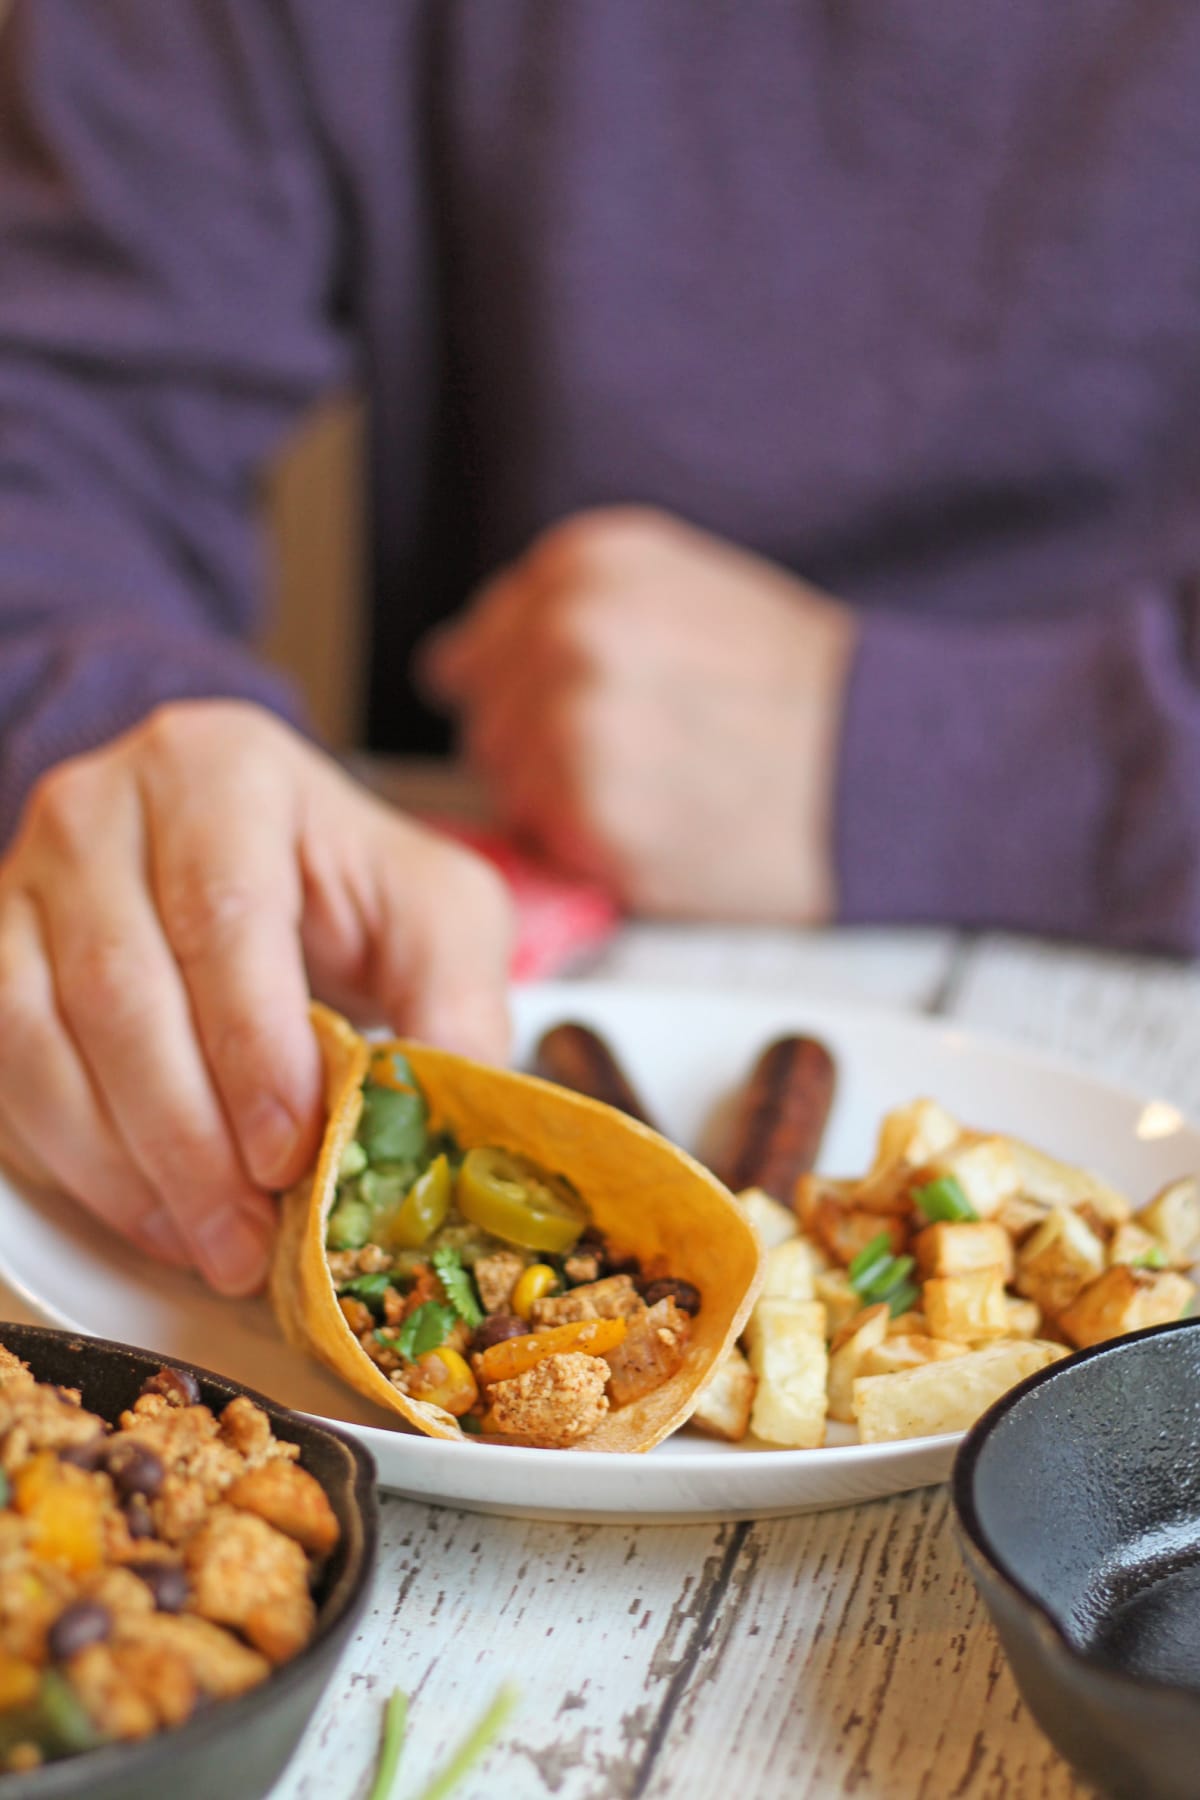 Hand holding vegan tofu taco on plate with seitan sausage links and potatoes.